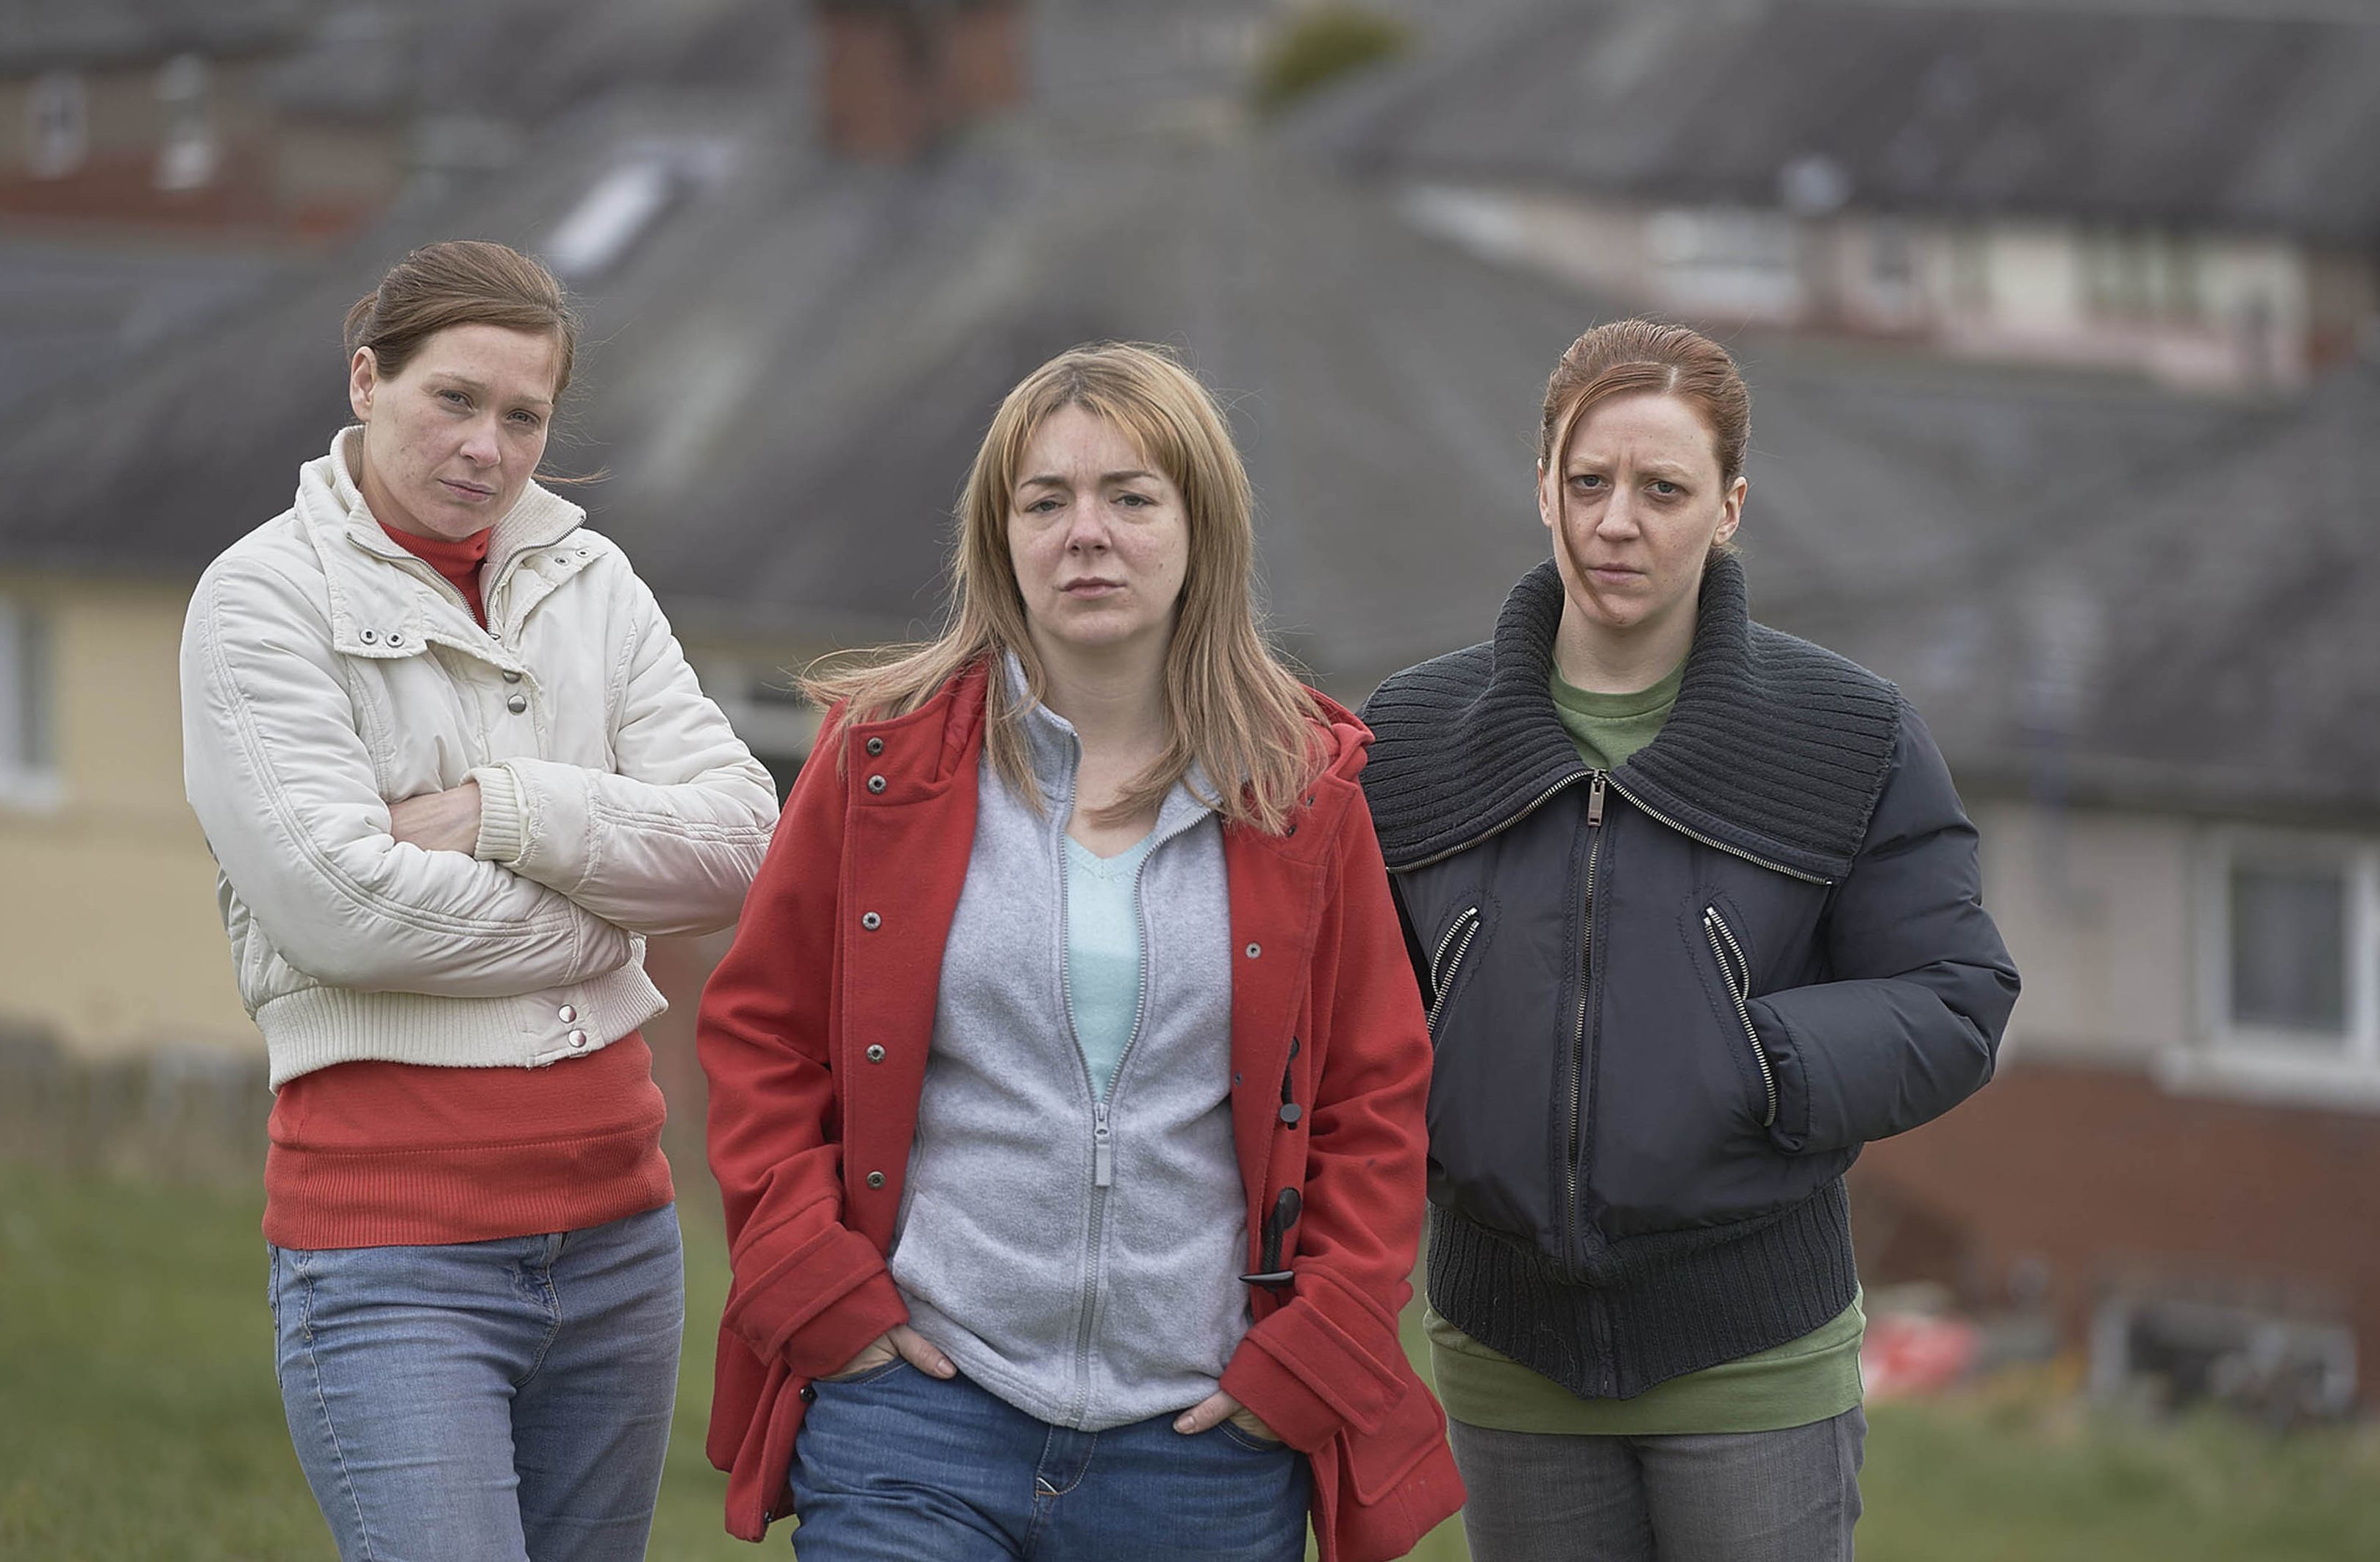 Pictured from The Moorside. (left - right) Sian Brooke as Natalie Brown, Sheridan Smith as Julie Bushby, Gemma Whelan as Karen Matthews.